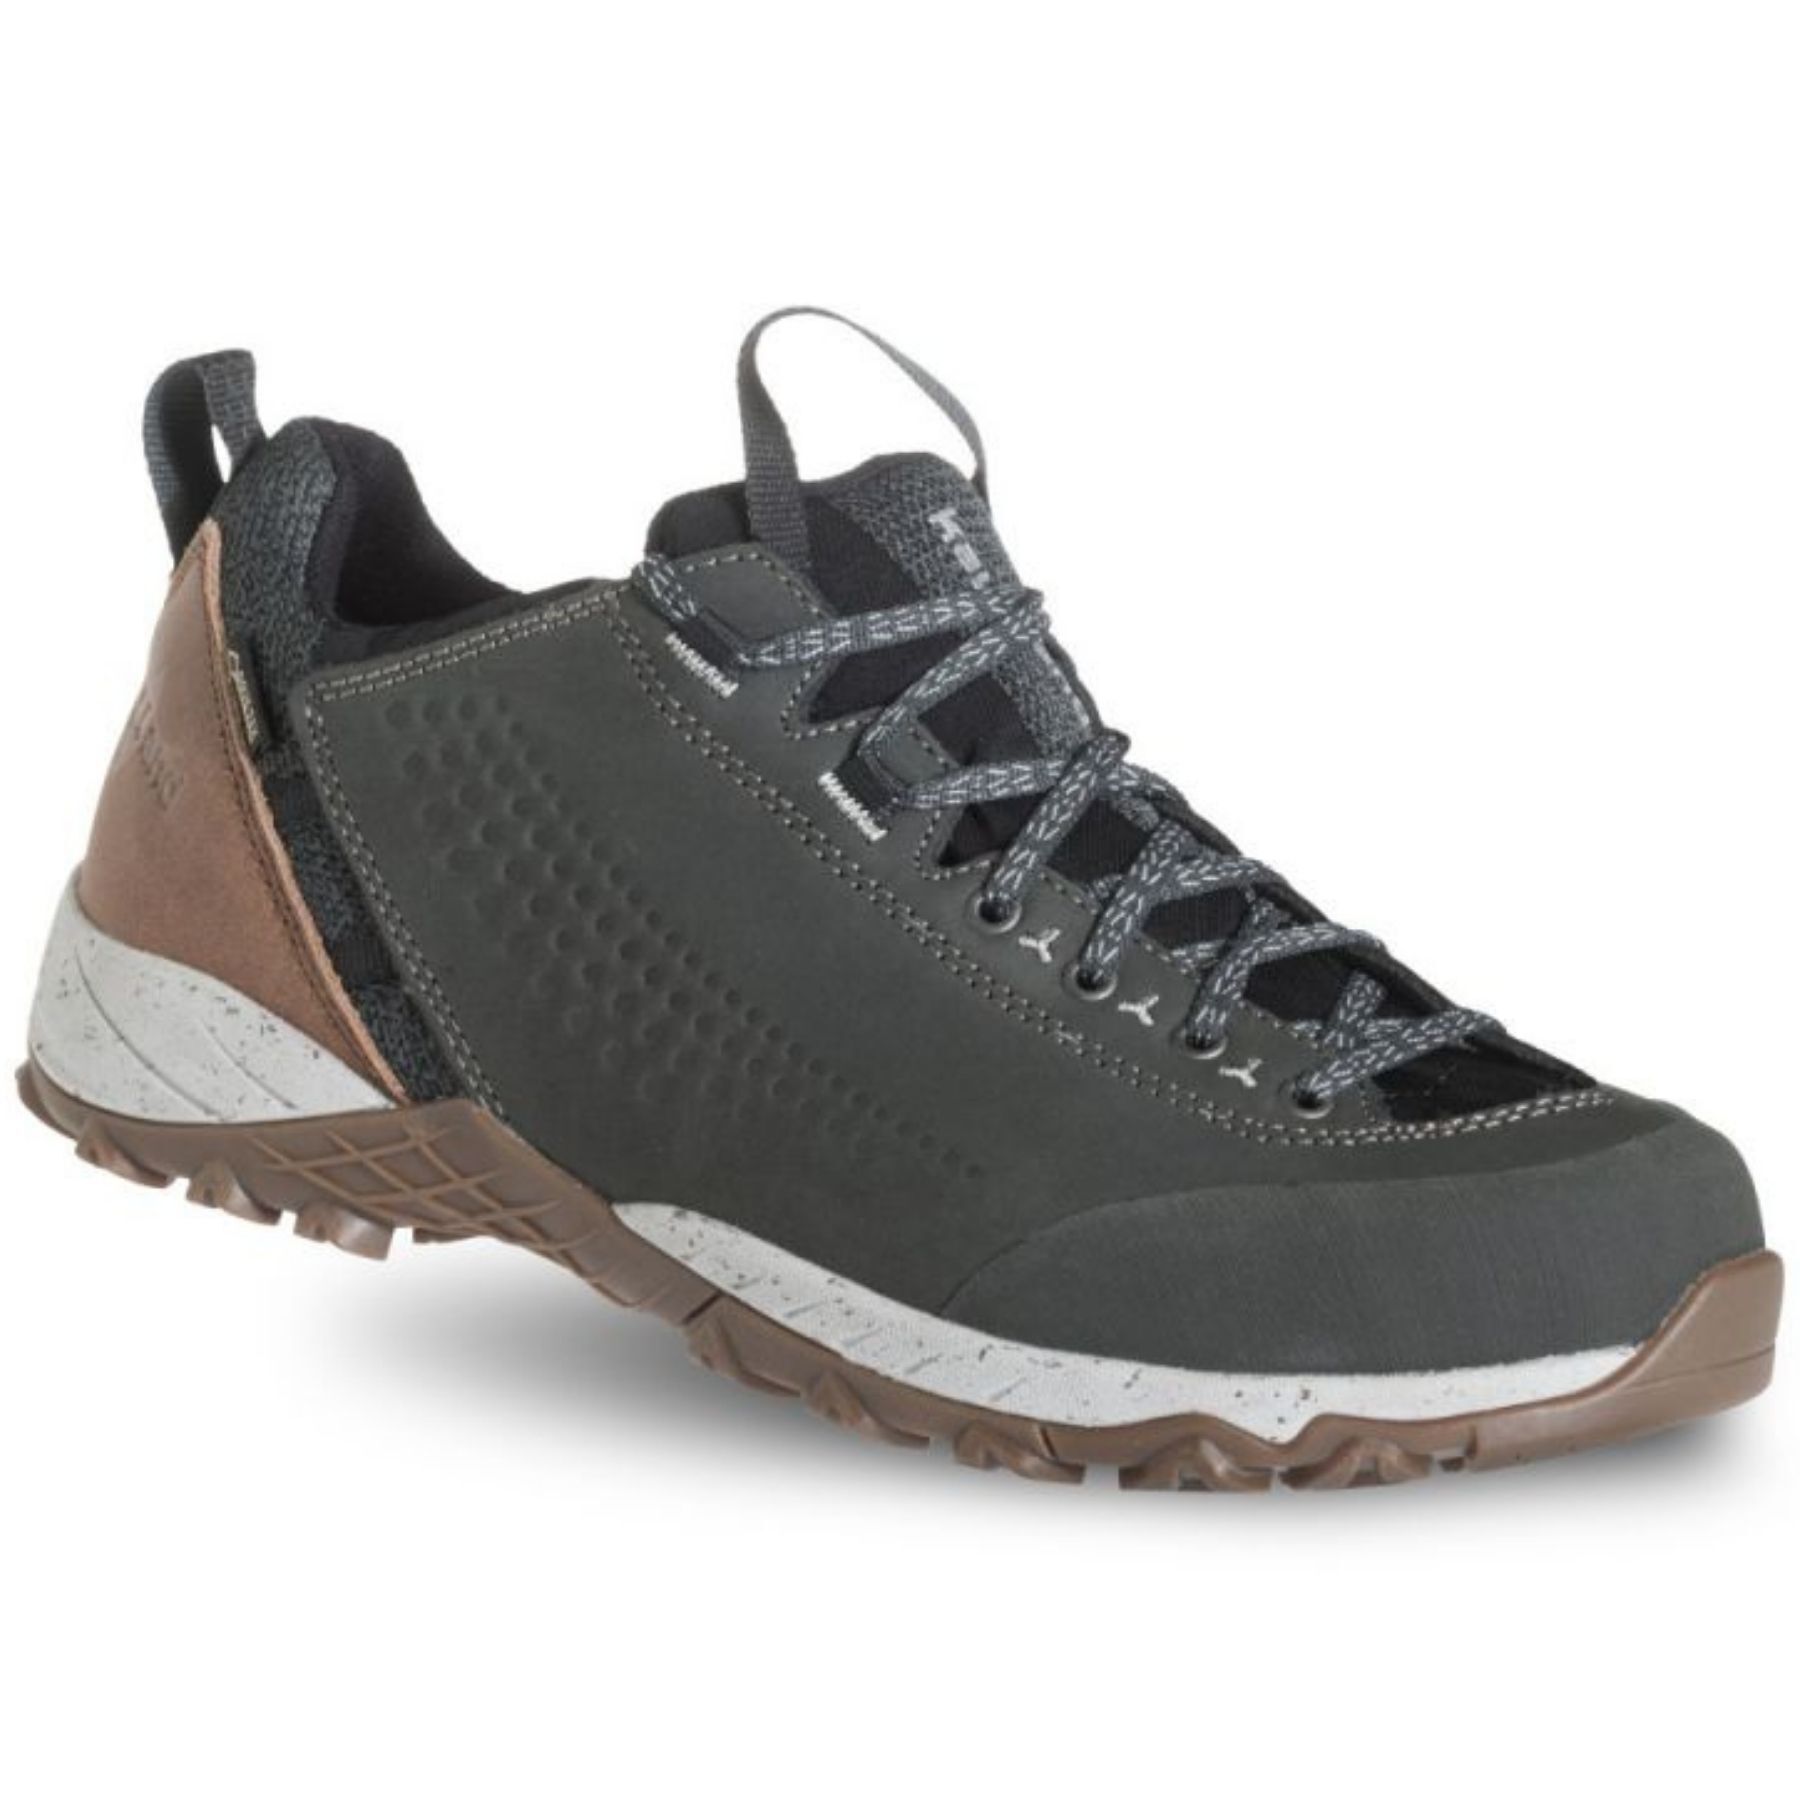 Kayland Alpha Nubuck GTX - Walking shoes - Men's